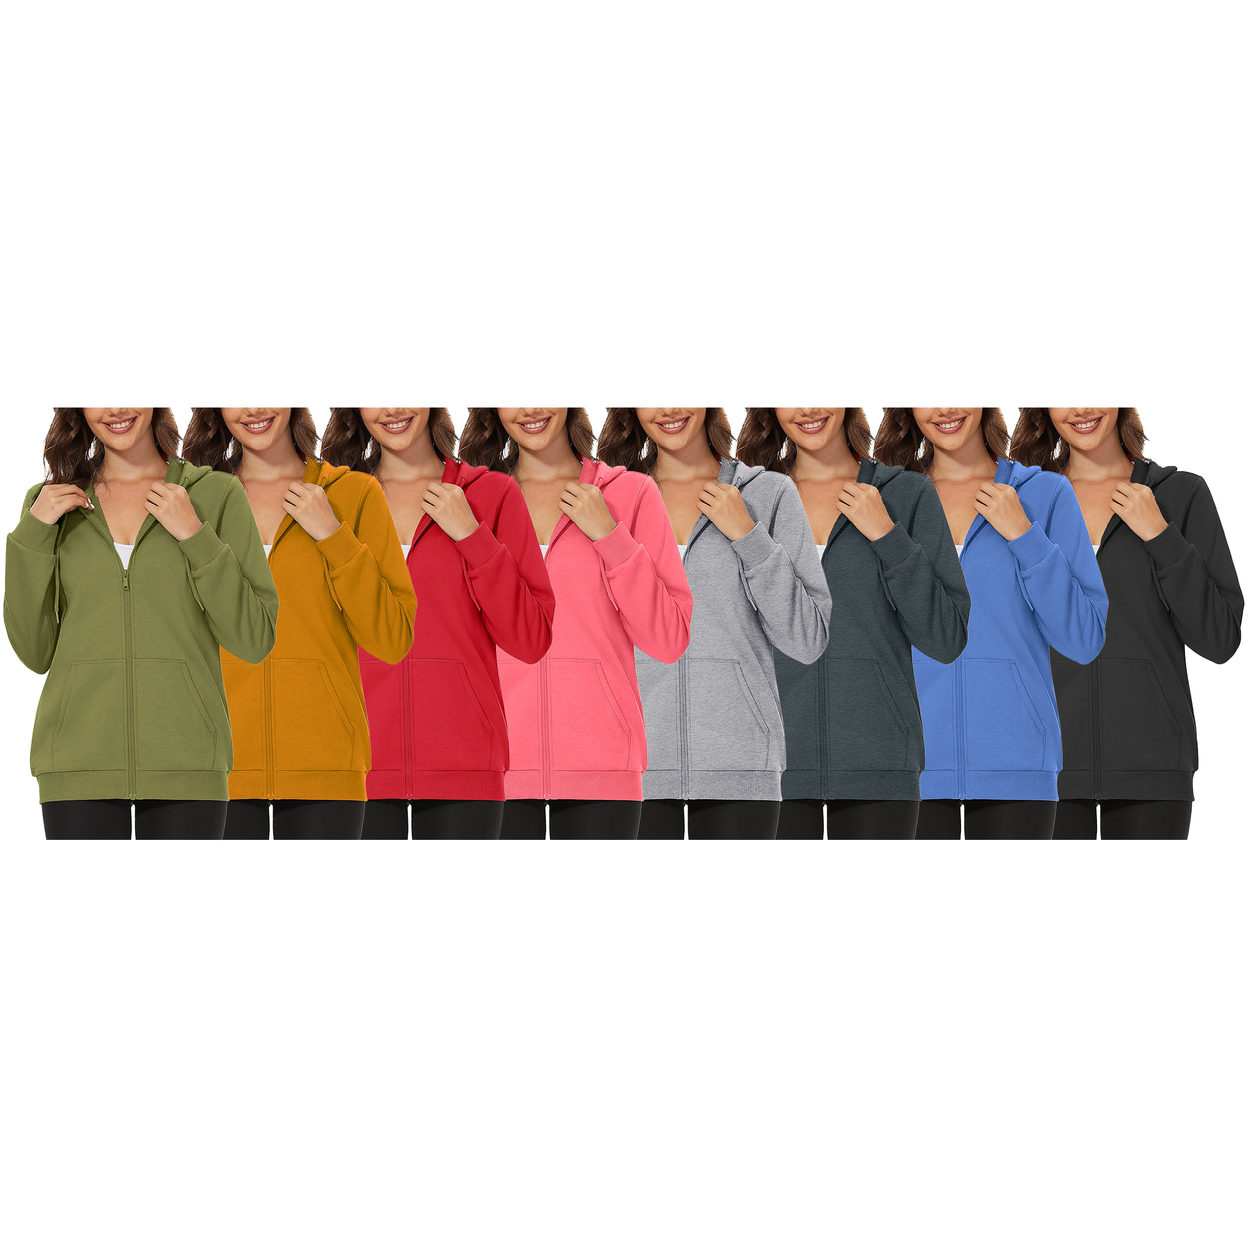 Women's Winter Warm Soft Blend Fleece Lined Full Zip Up Hoodie - Charcoal, X-large